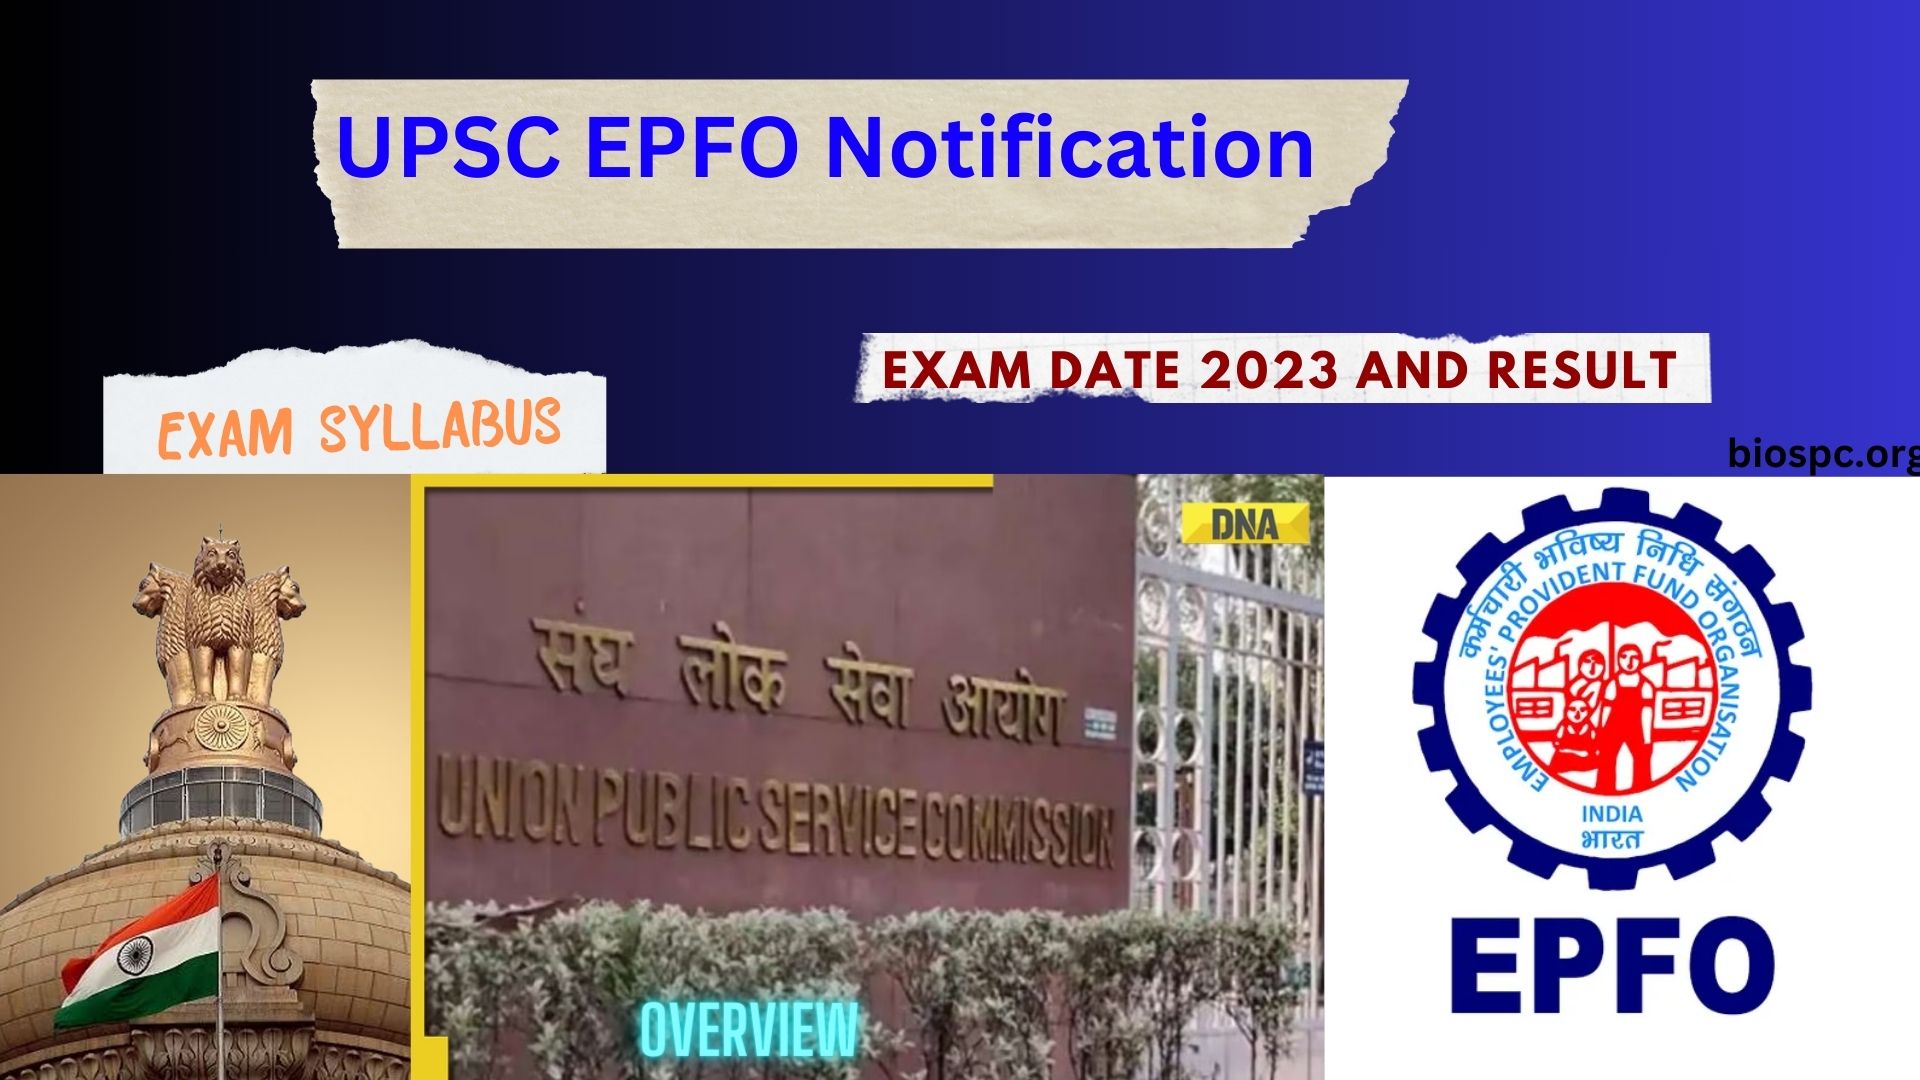 UPSC EPFO Notification